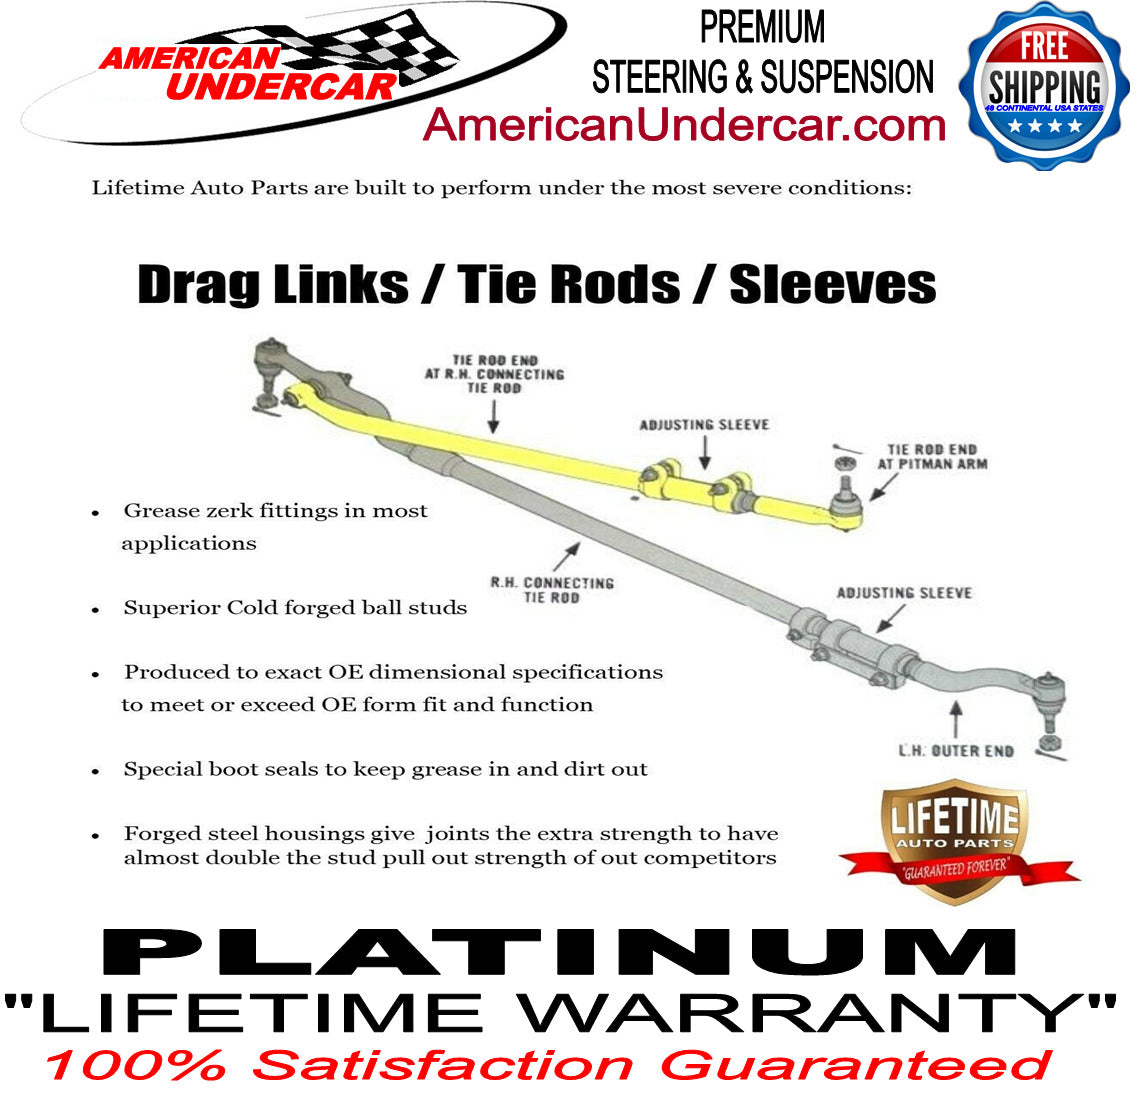 Lifetime Control Arm Rear Suspension Kit for 2007-2017 Chevrolet, Buick, GMC, Saturn